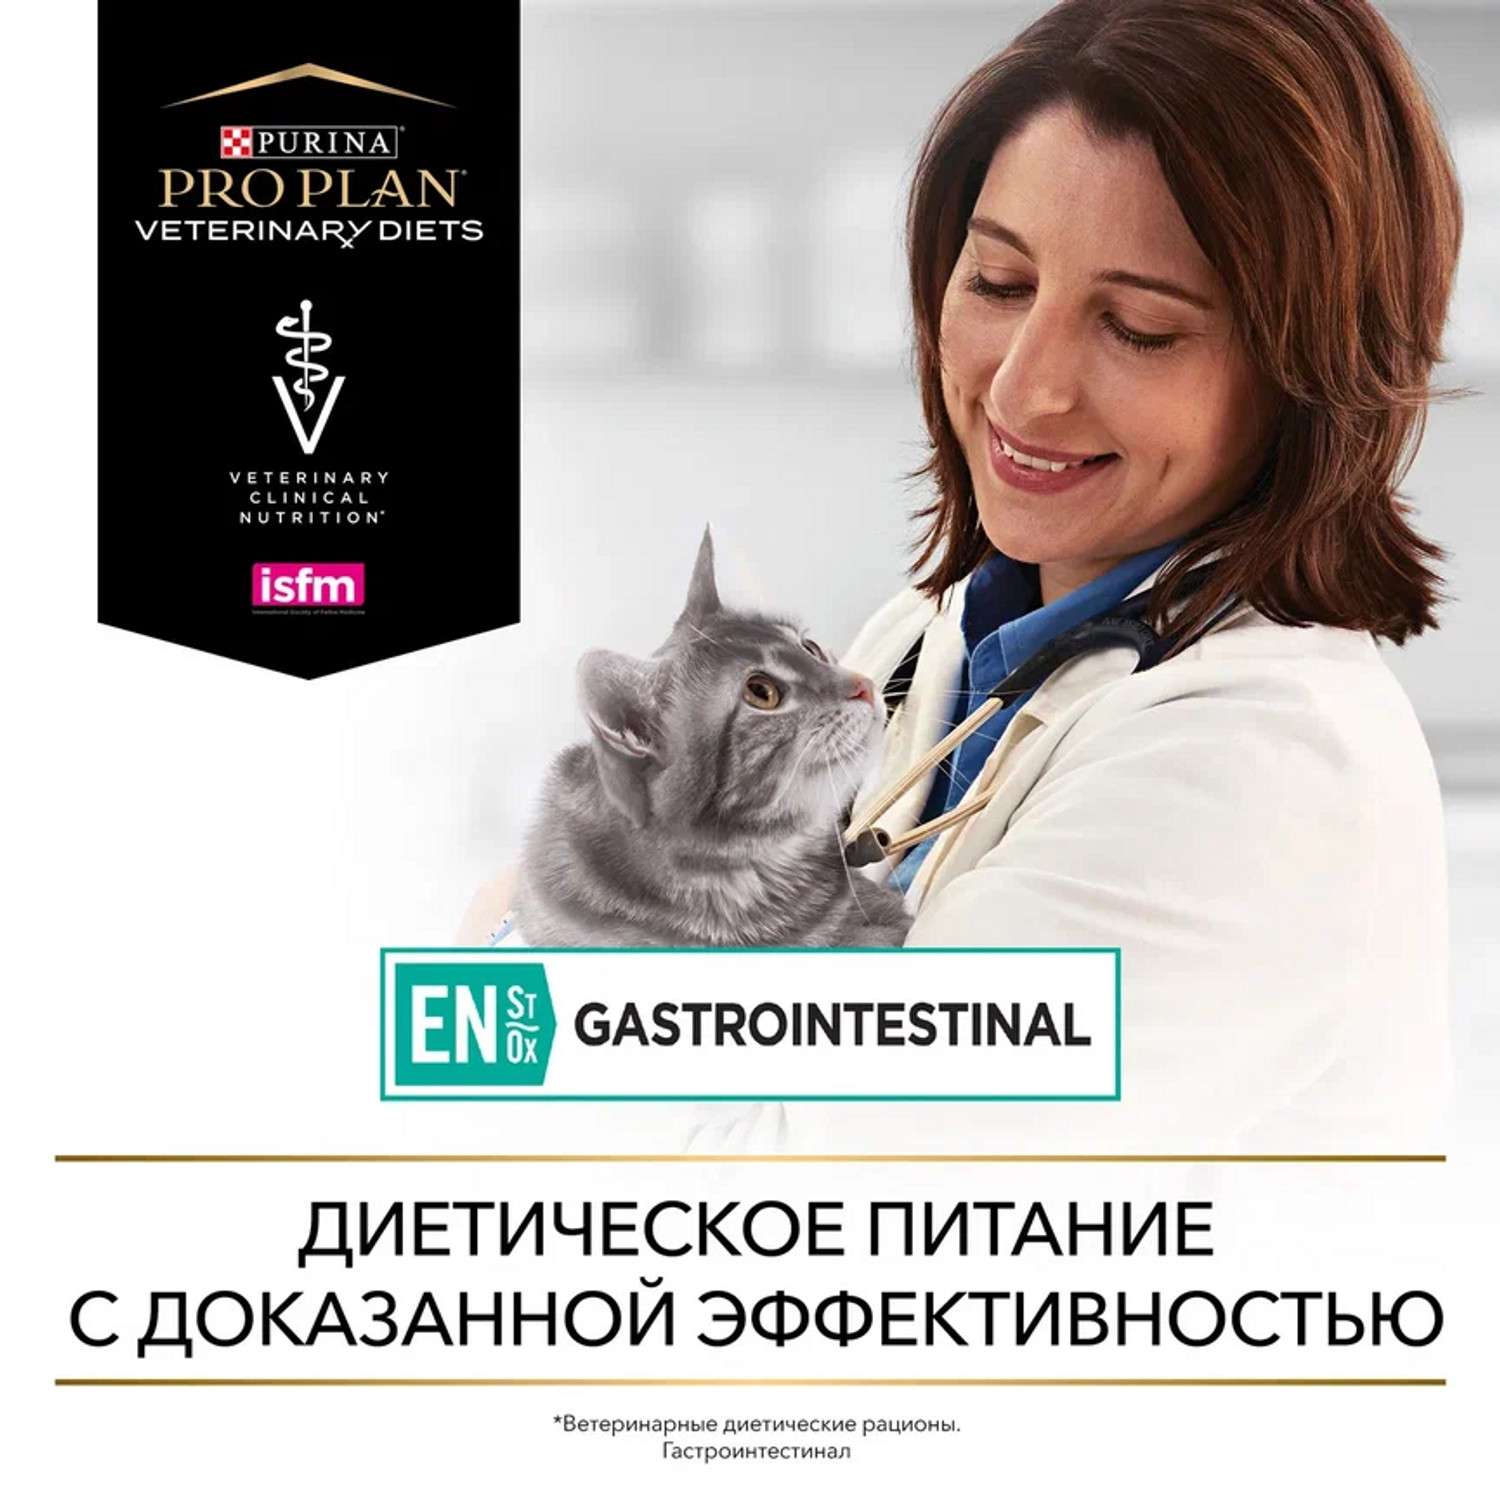 Корм для кошек Purina Pro Plan Veterinary diets ЕN при патологии ЖКТ 400г - фото 12